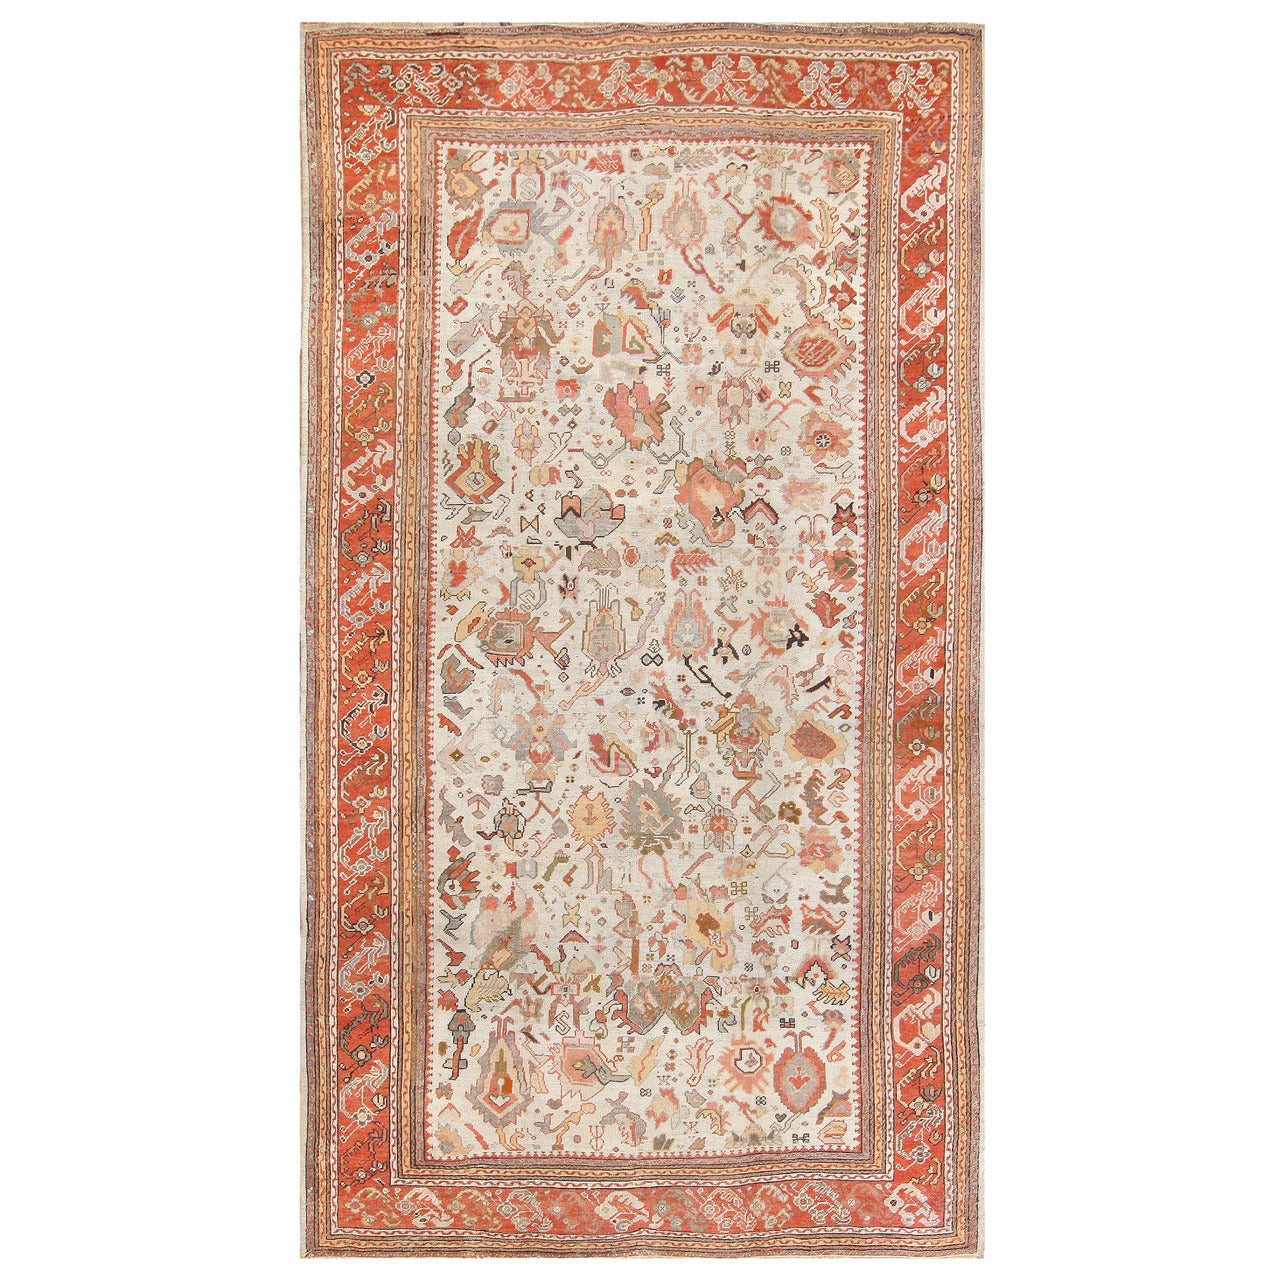 Nazmiyal Antique Ghiordes Turkish Carpet. Size: 9 ft 10 in x 16 ft 9 in 